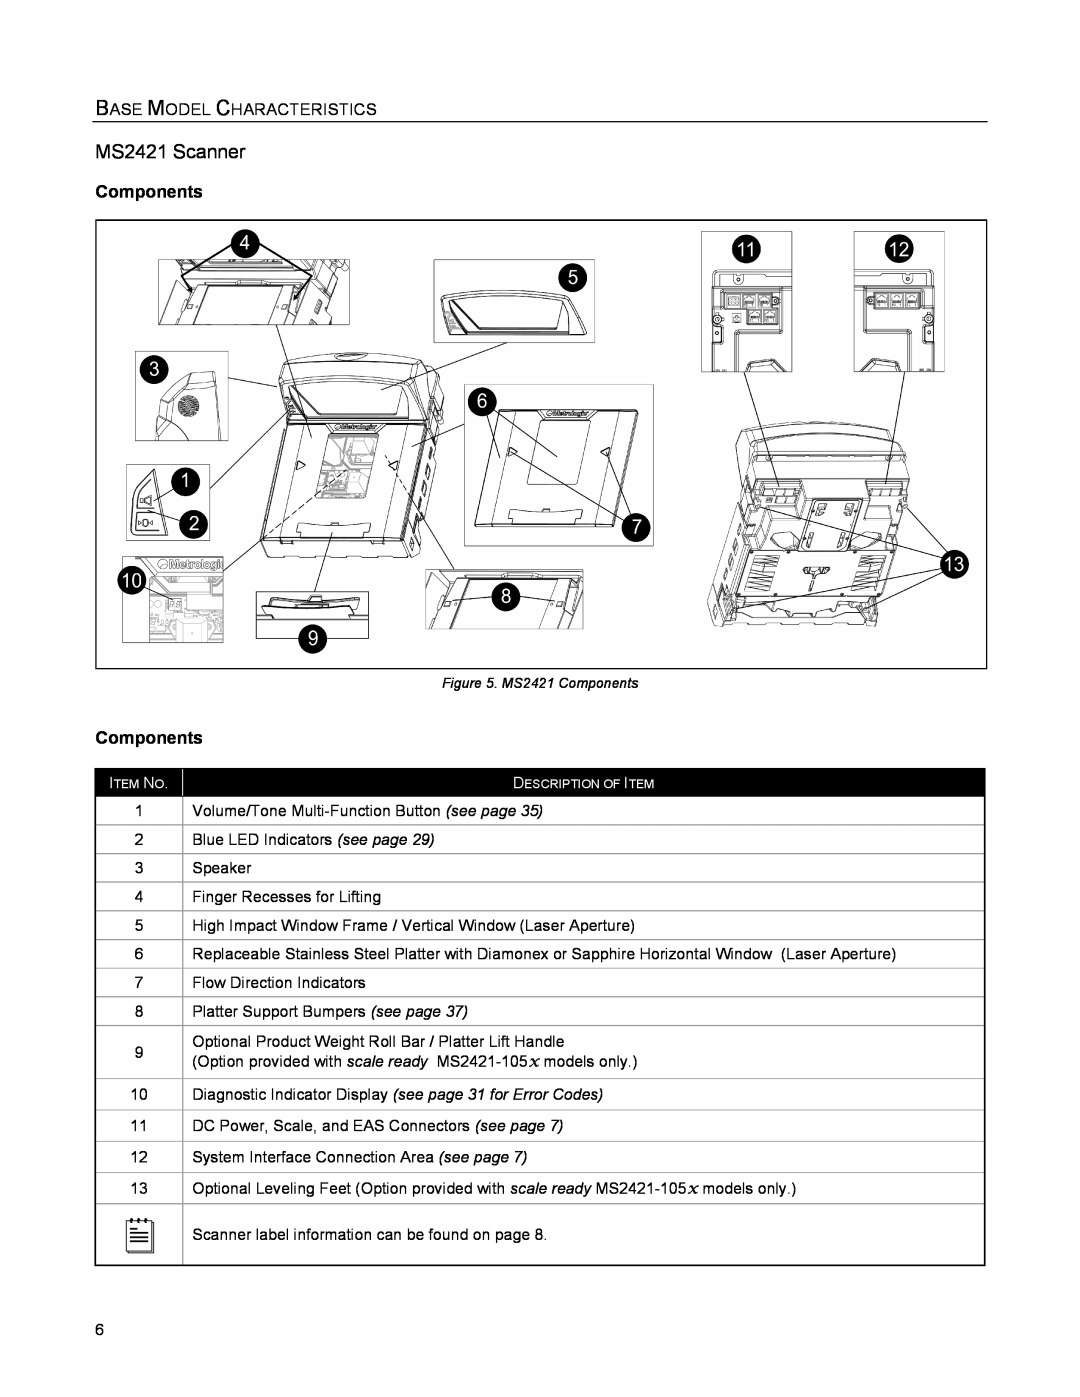 Metrologic Instruments MS2422 manual MS2421 Scanner, Base Model Characteristics, Components 